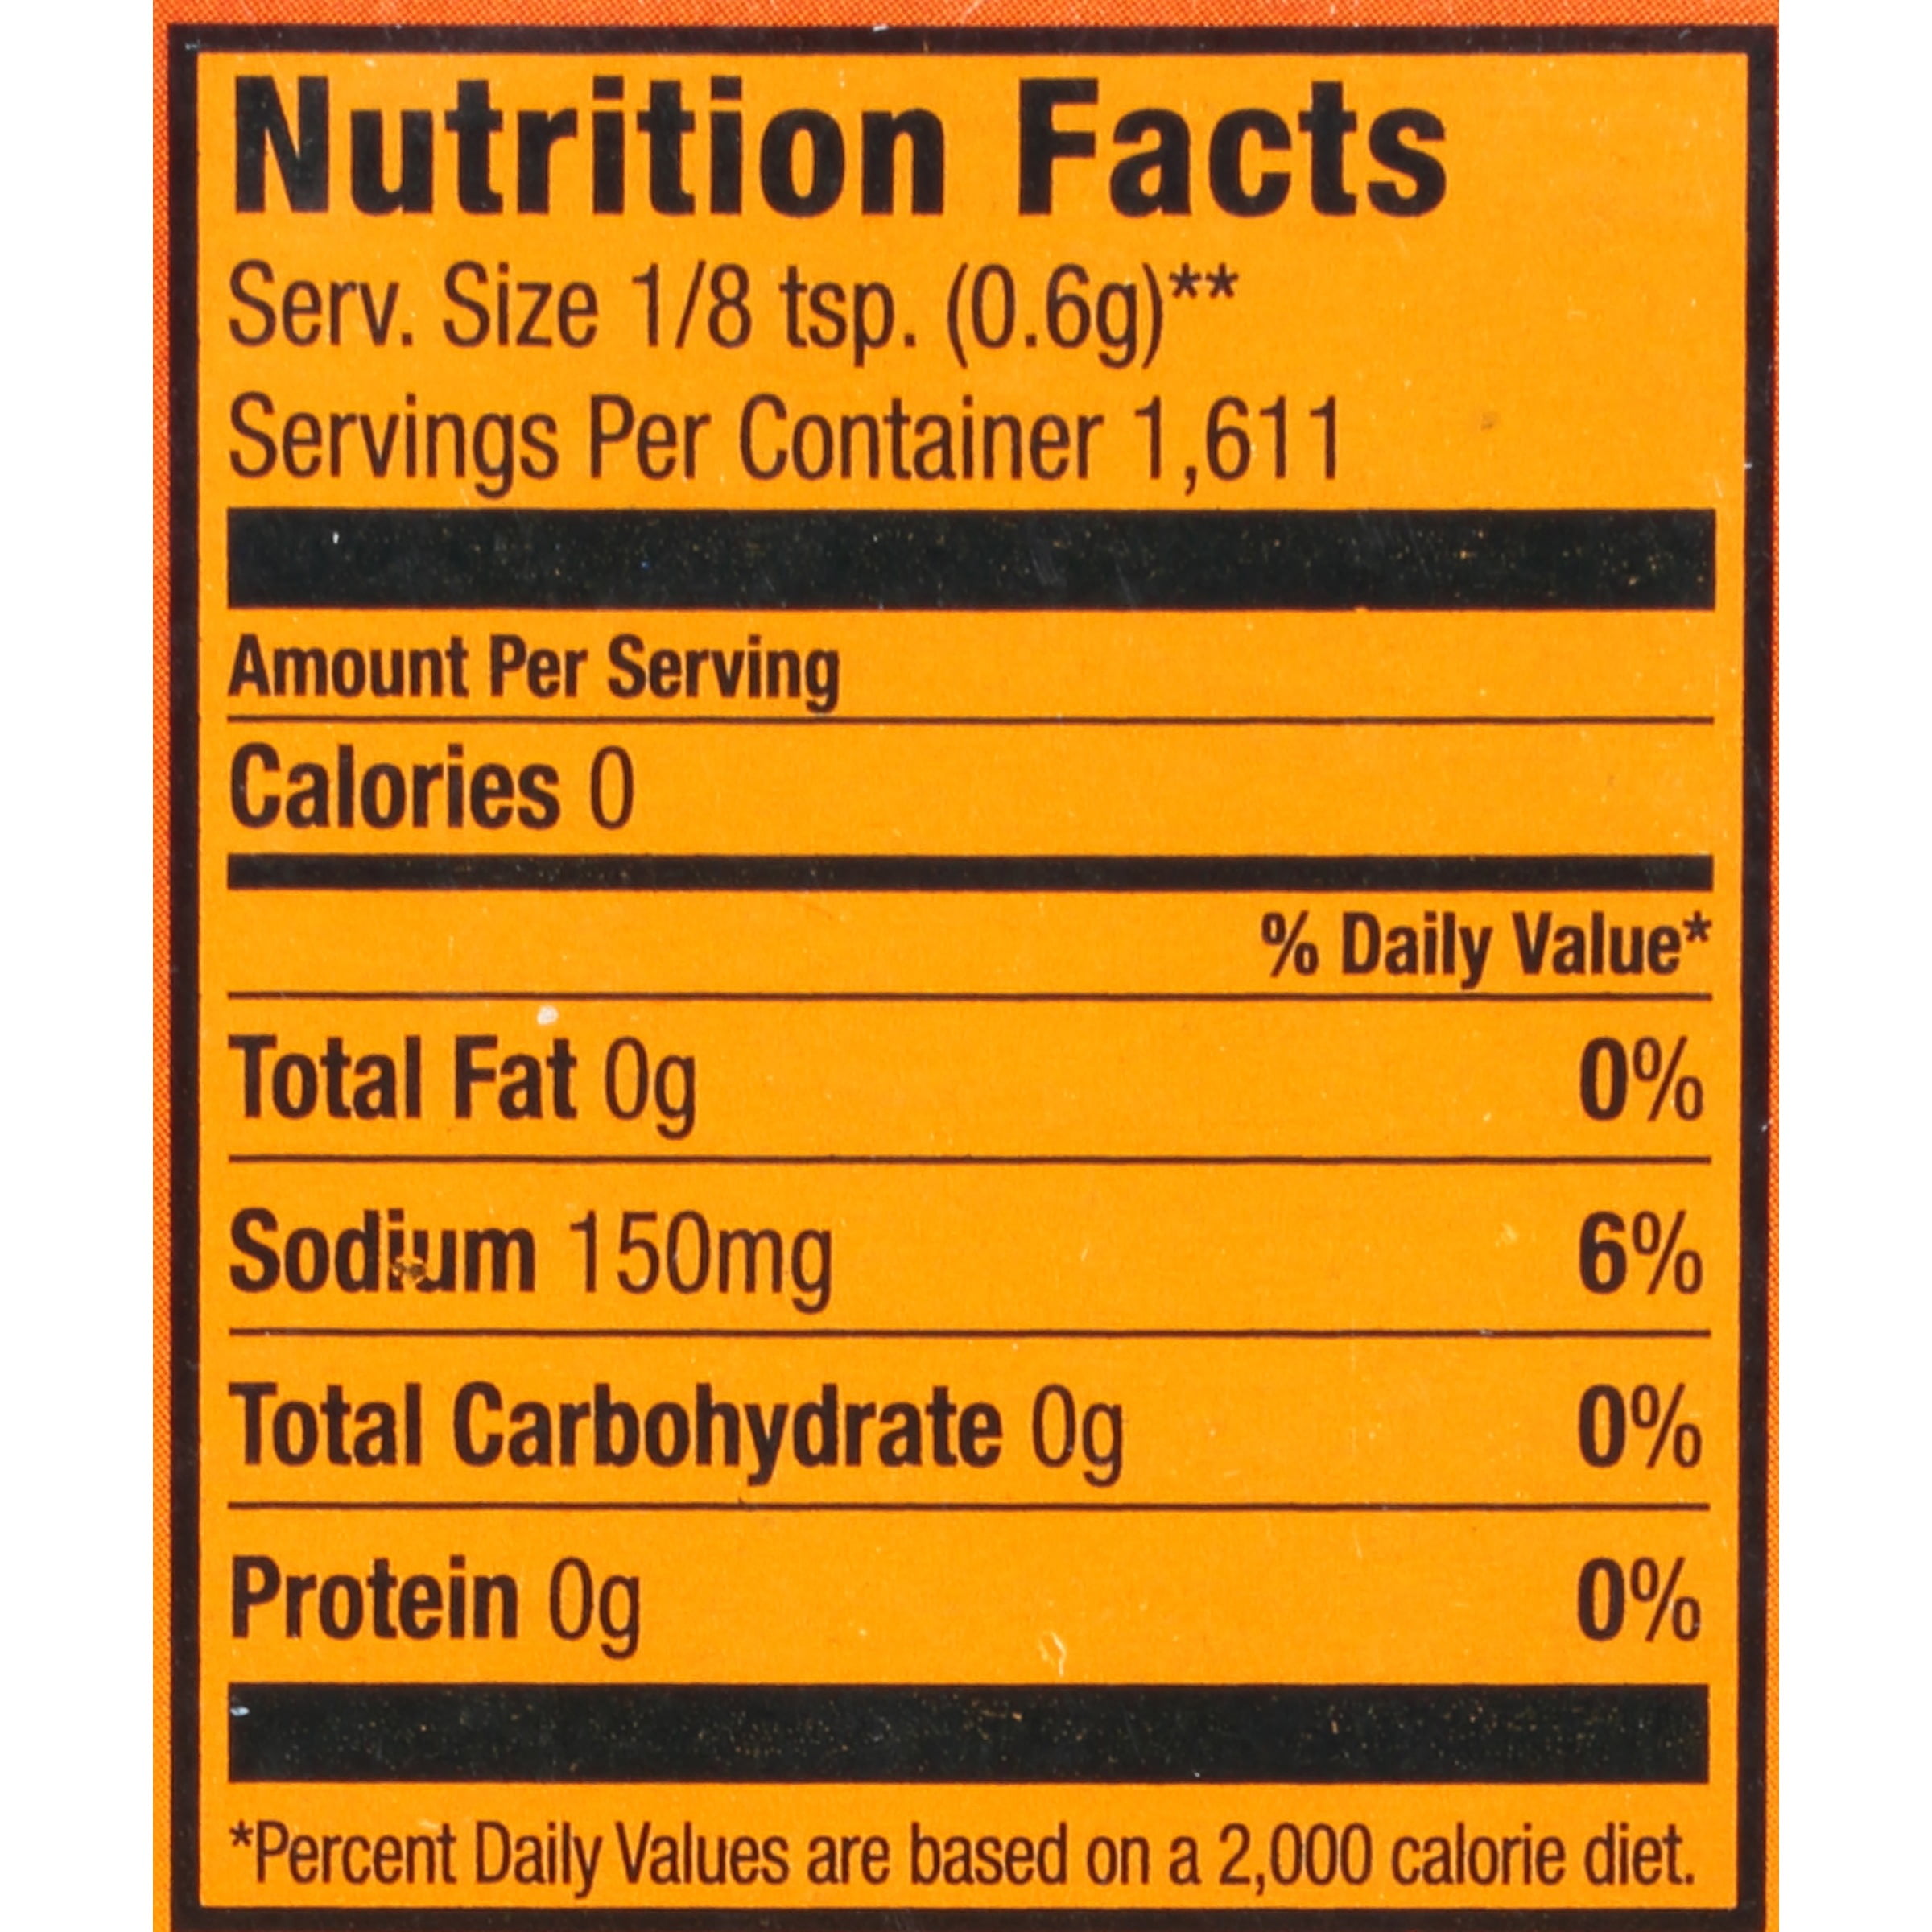 33 Nutrition Label Soda Labels Design Ideas 2020